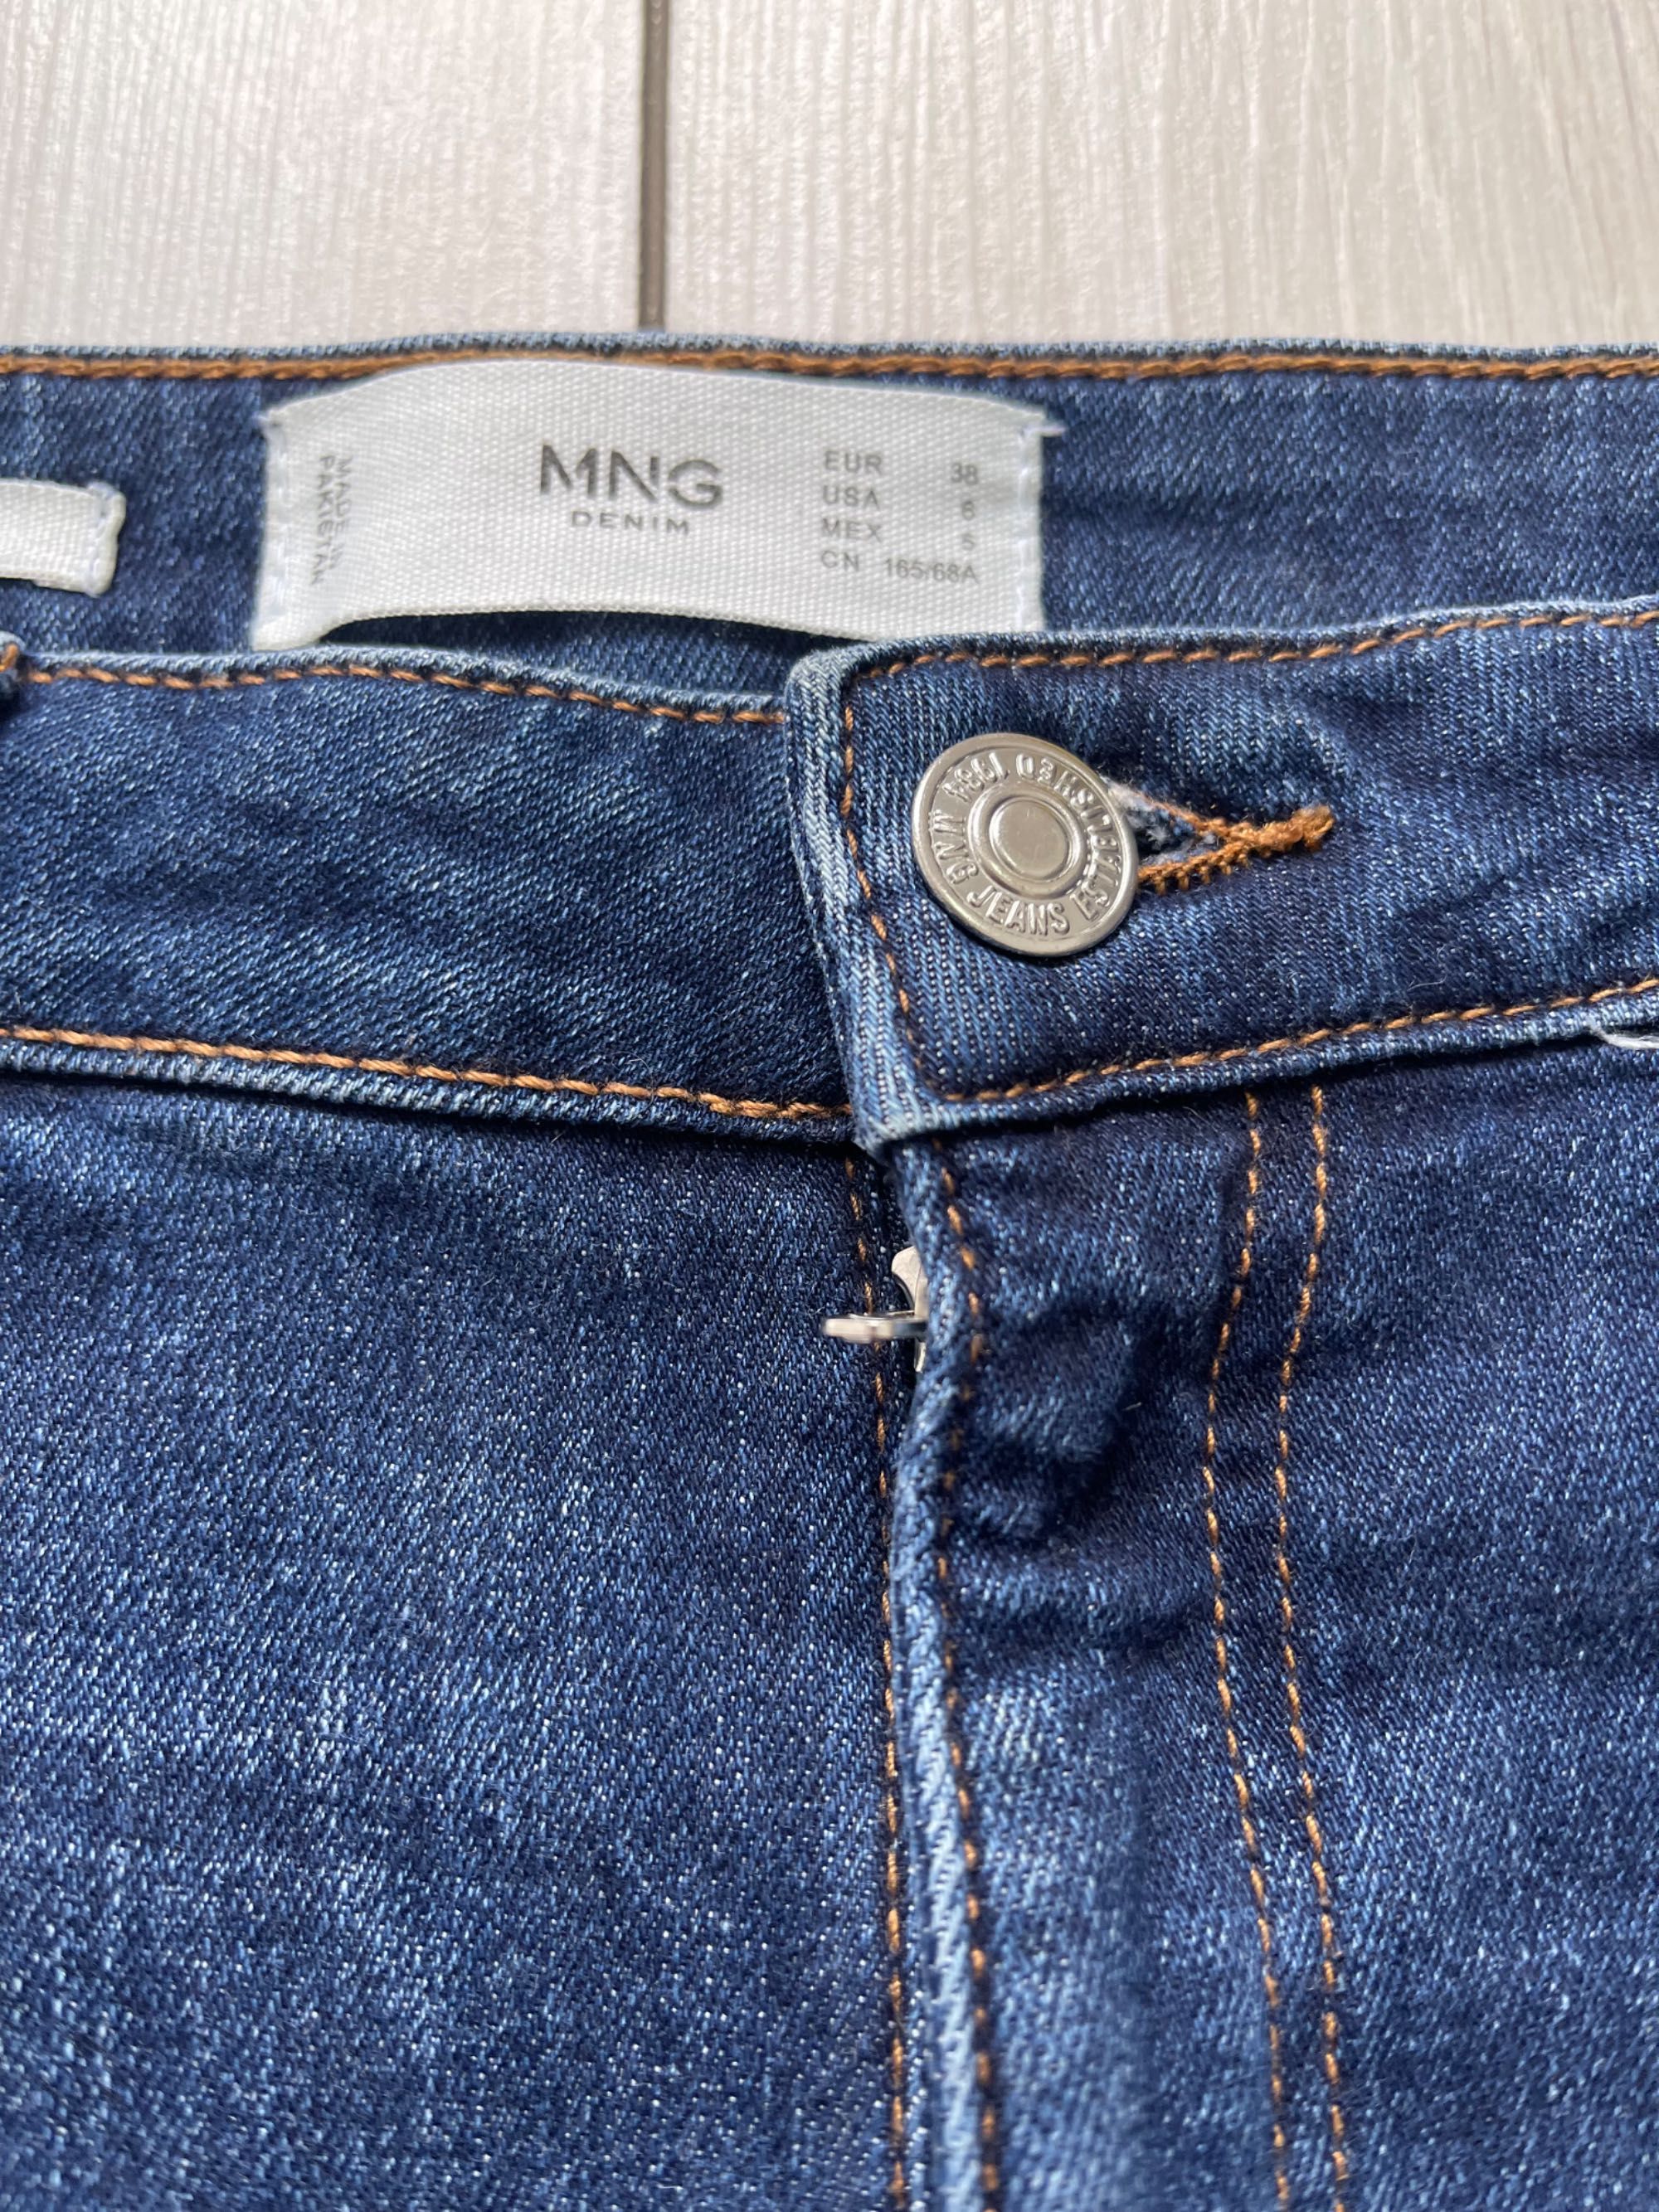 Mango Kim джинси 28 розмір.